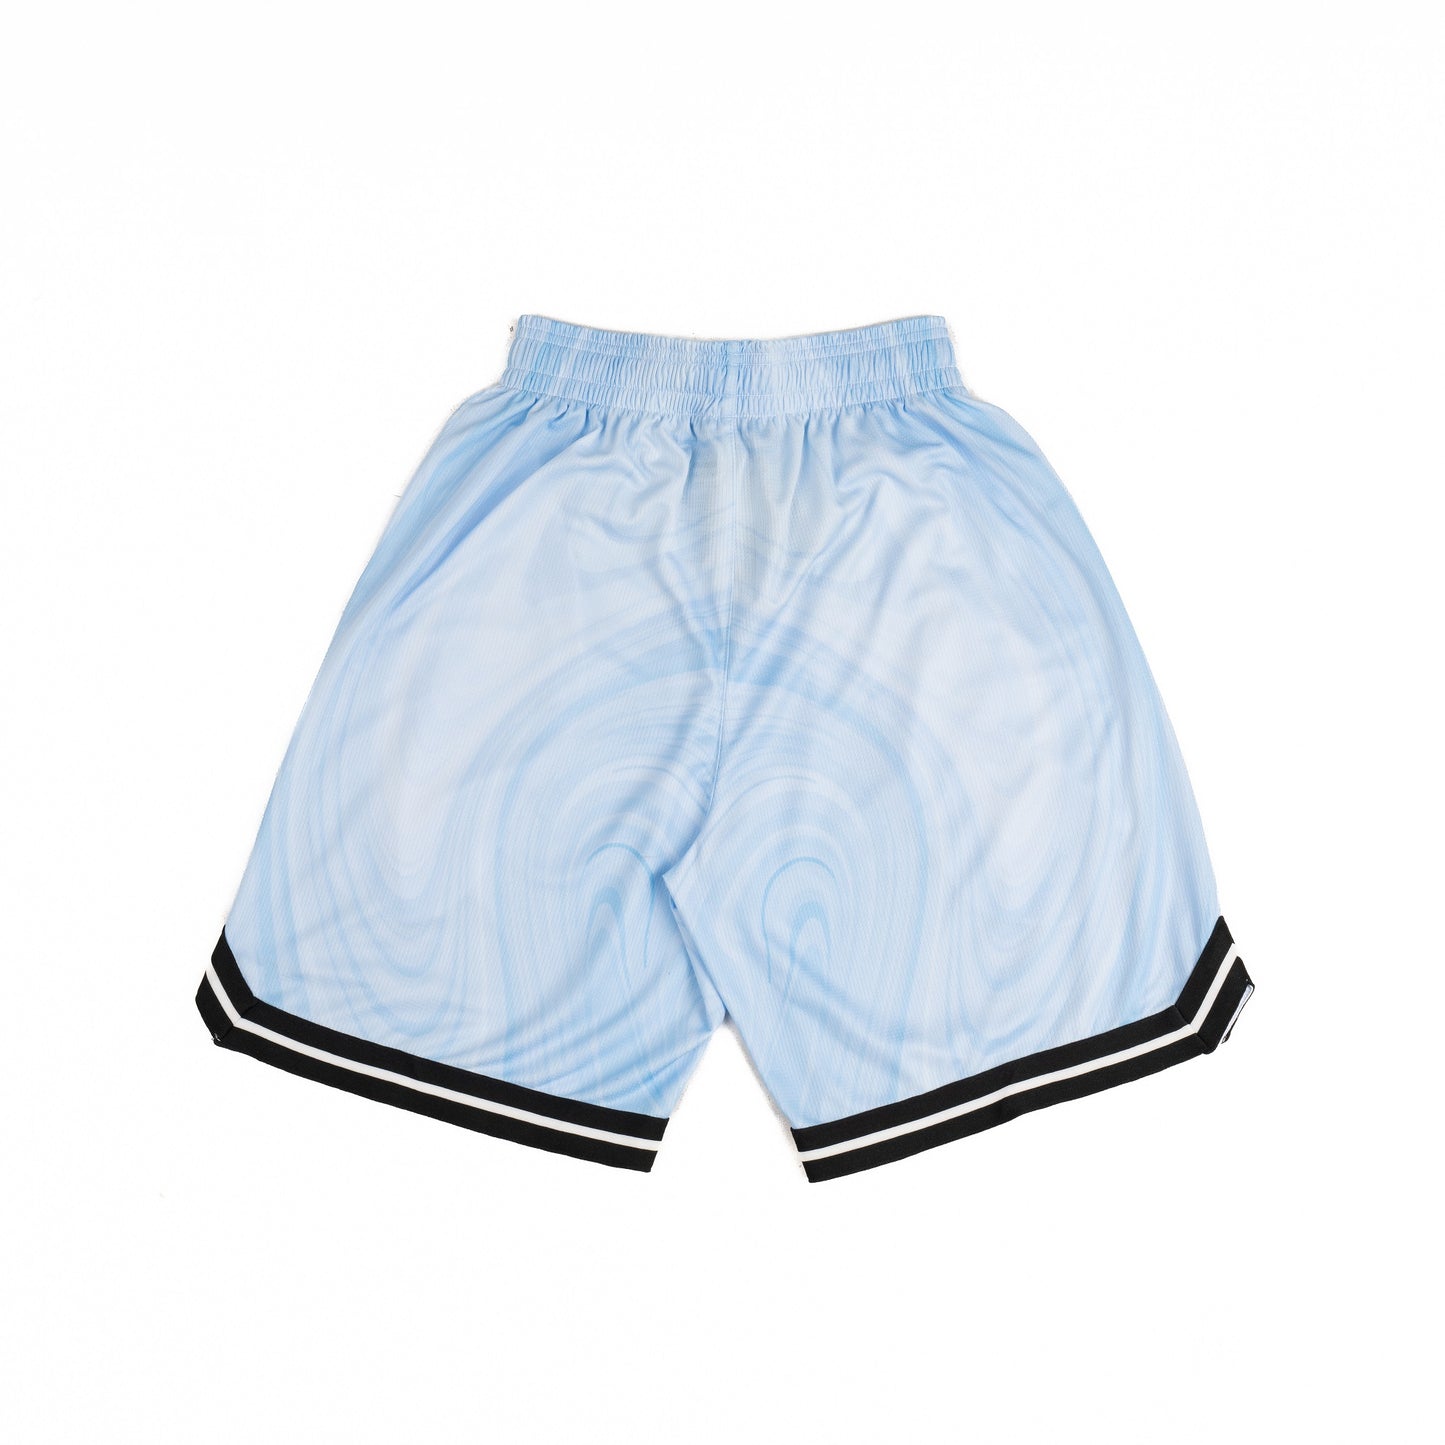 AZA Short Pants Basketball Marble Edition - Blue